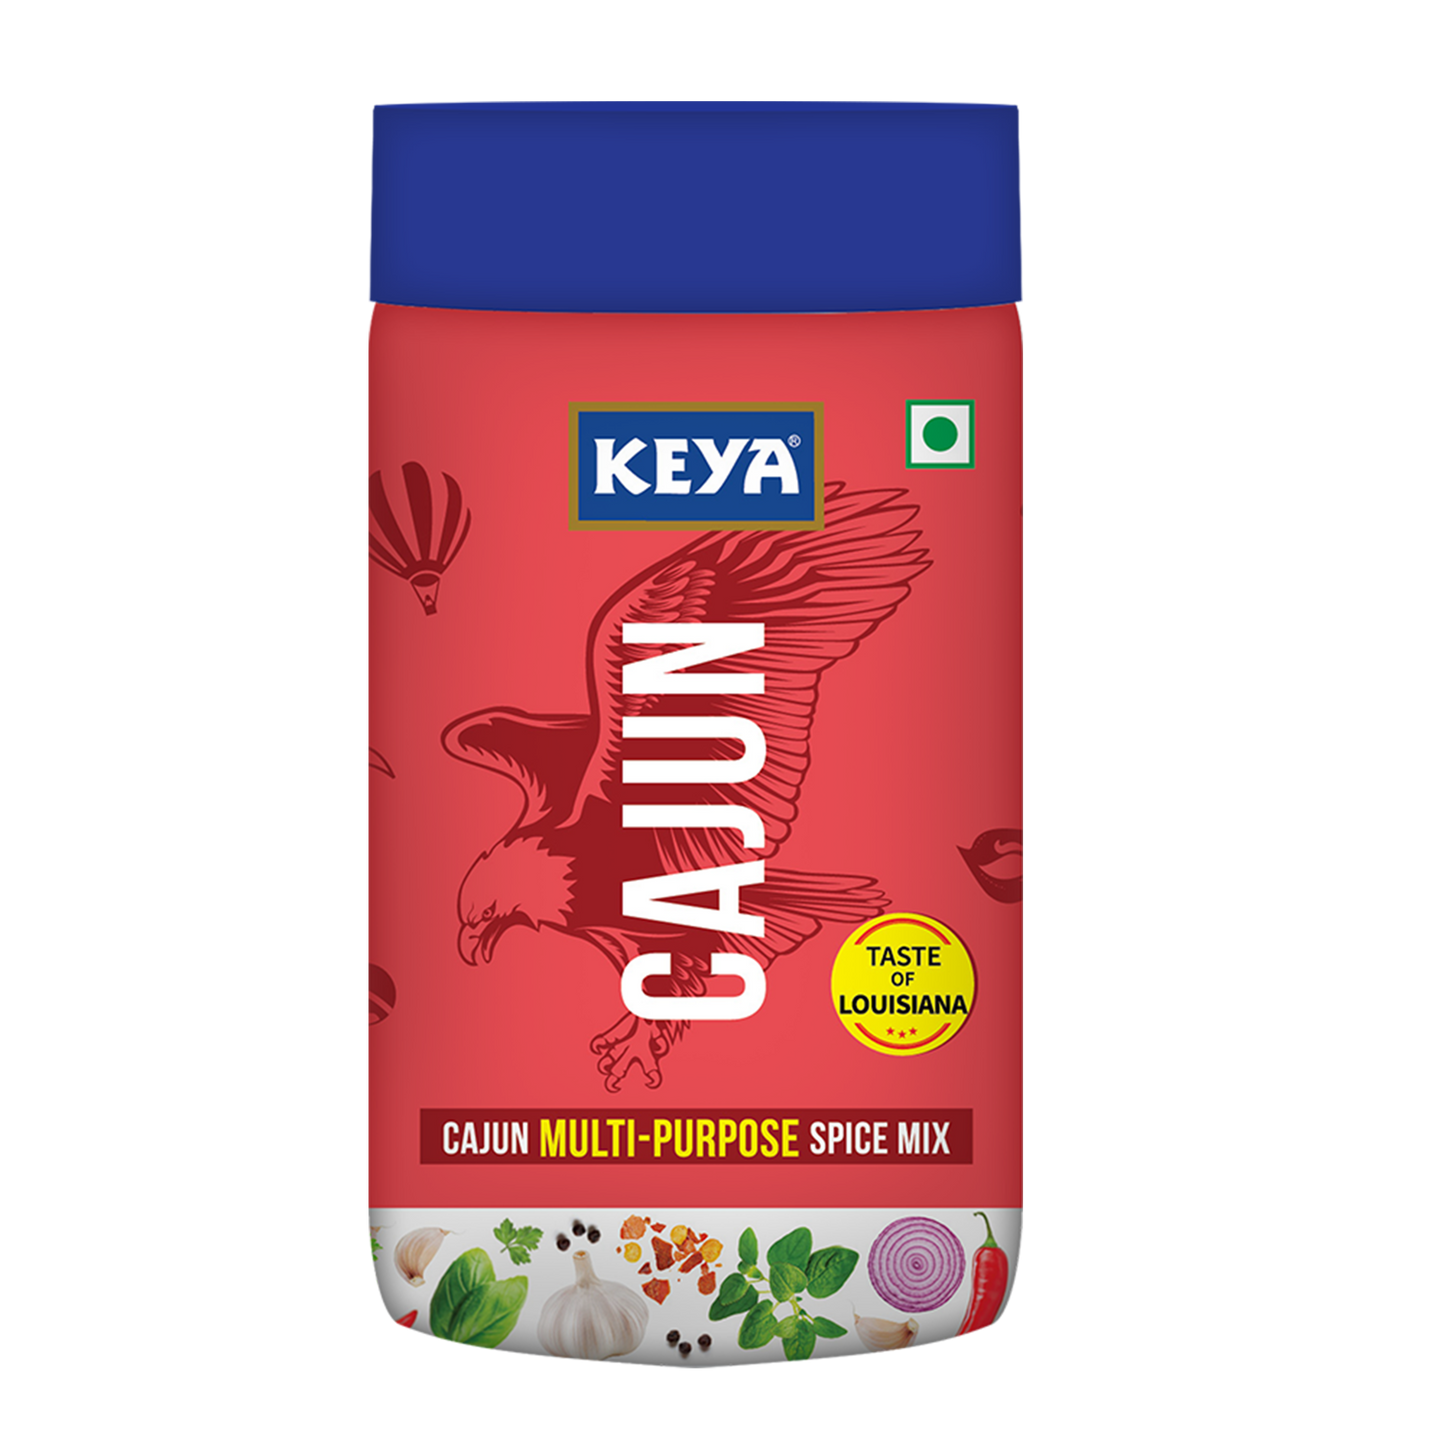 Keya Cajun Spice Mix 95g